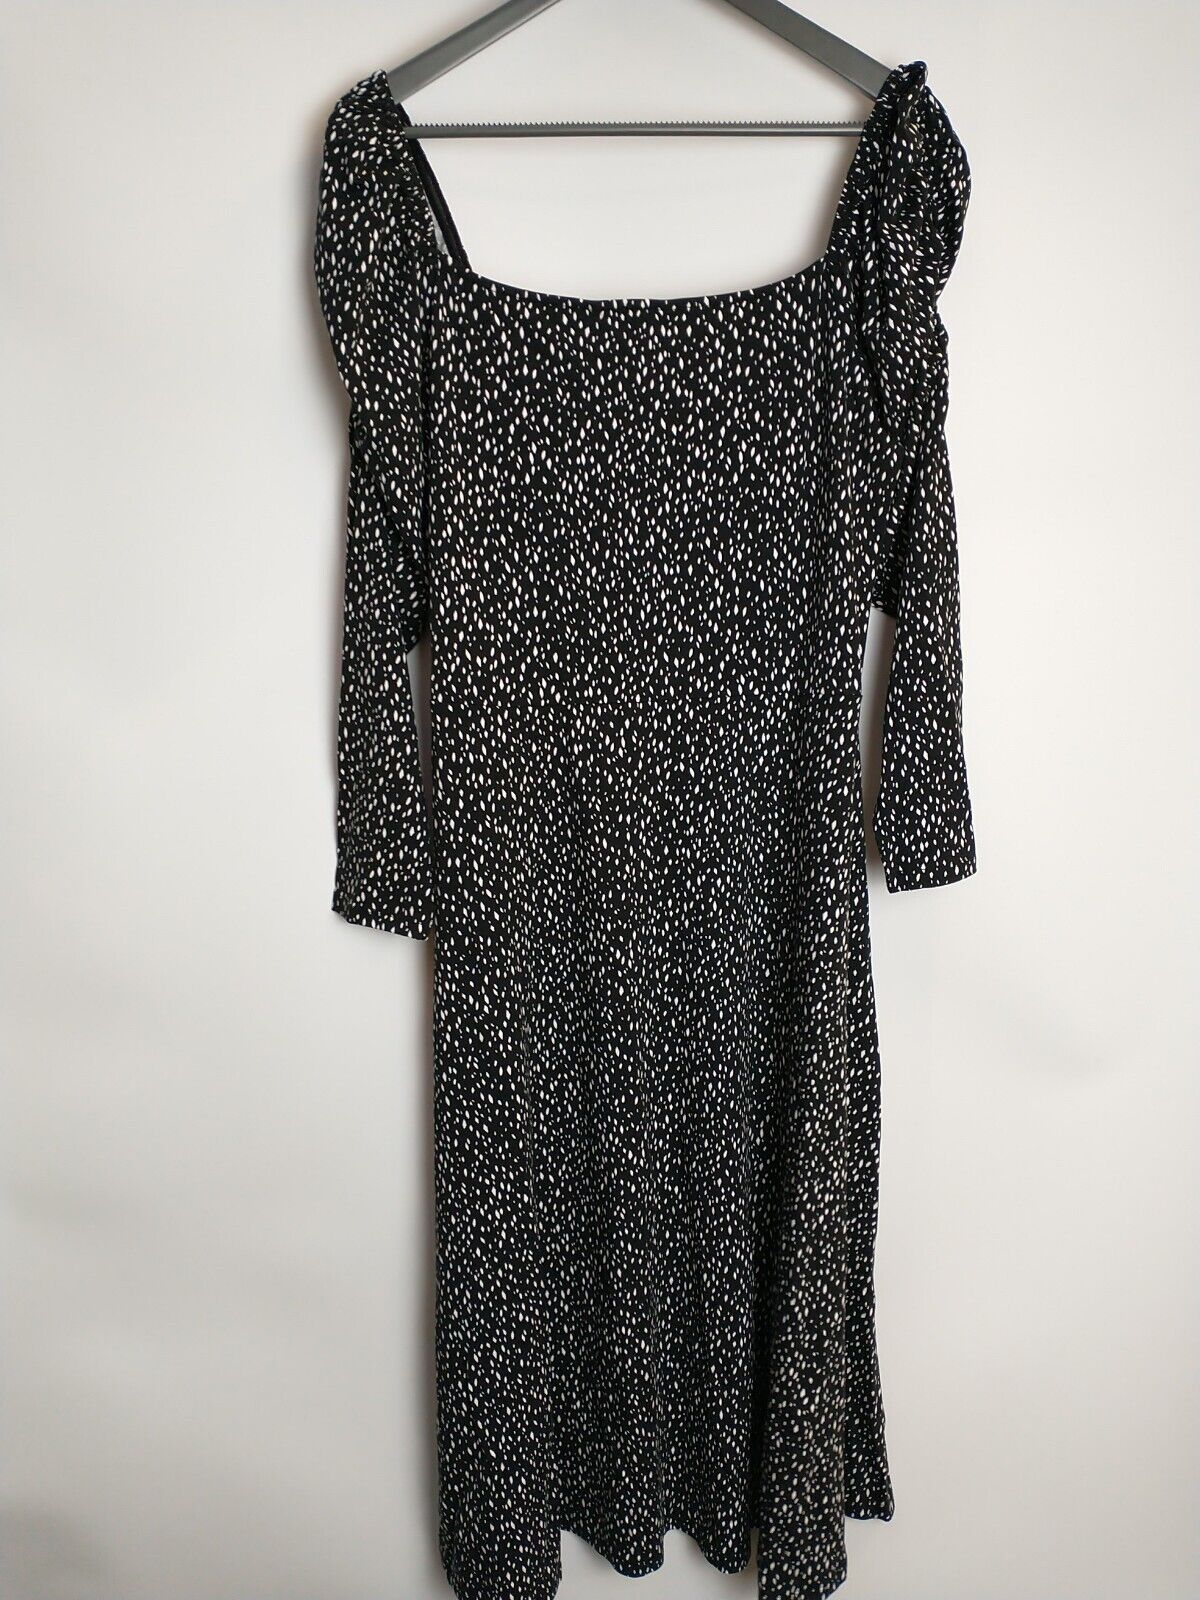 Sosandar Black Fleck Print Square Neck Jersey Midi Dress Size 20 **** V263